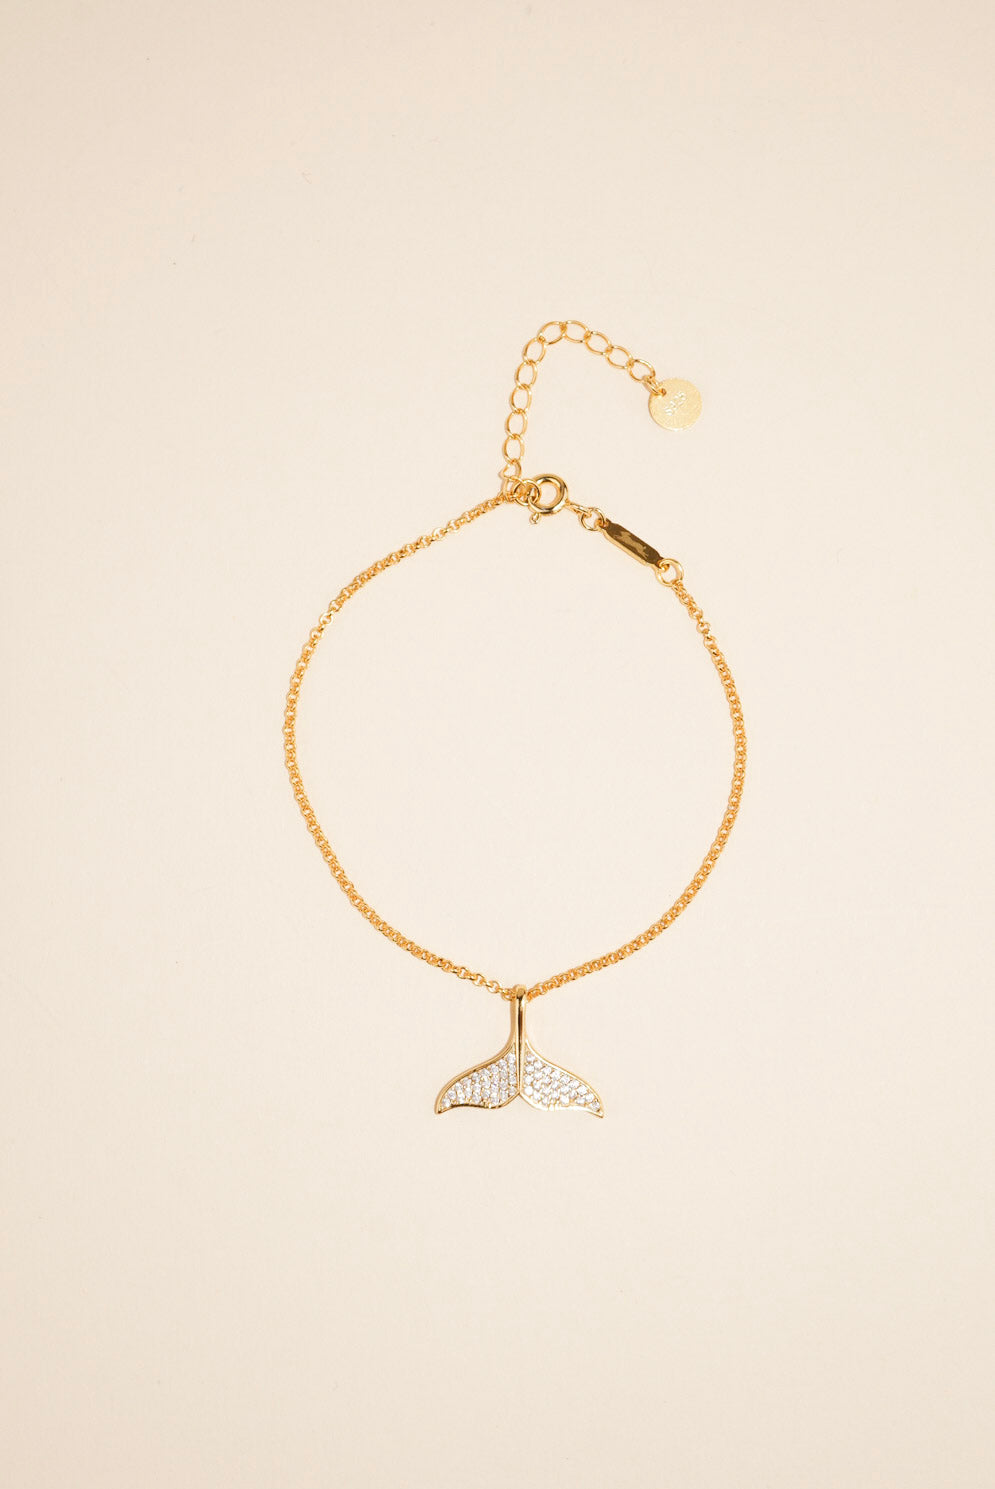 Gold whale tail bracelet